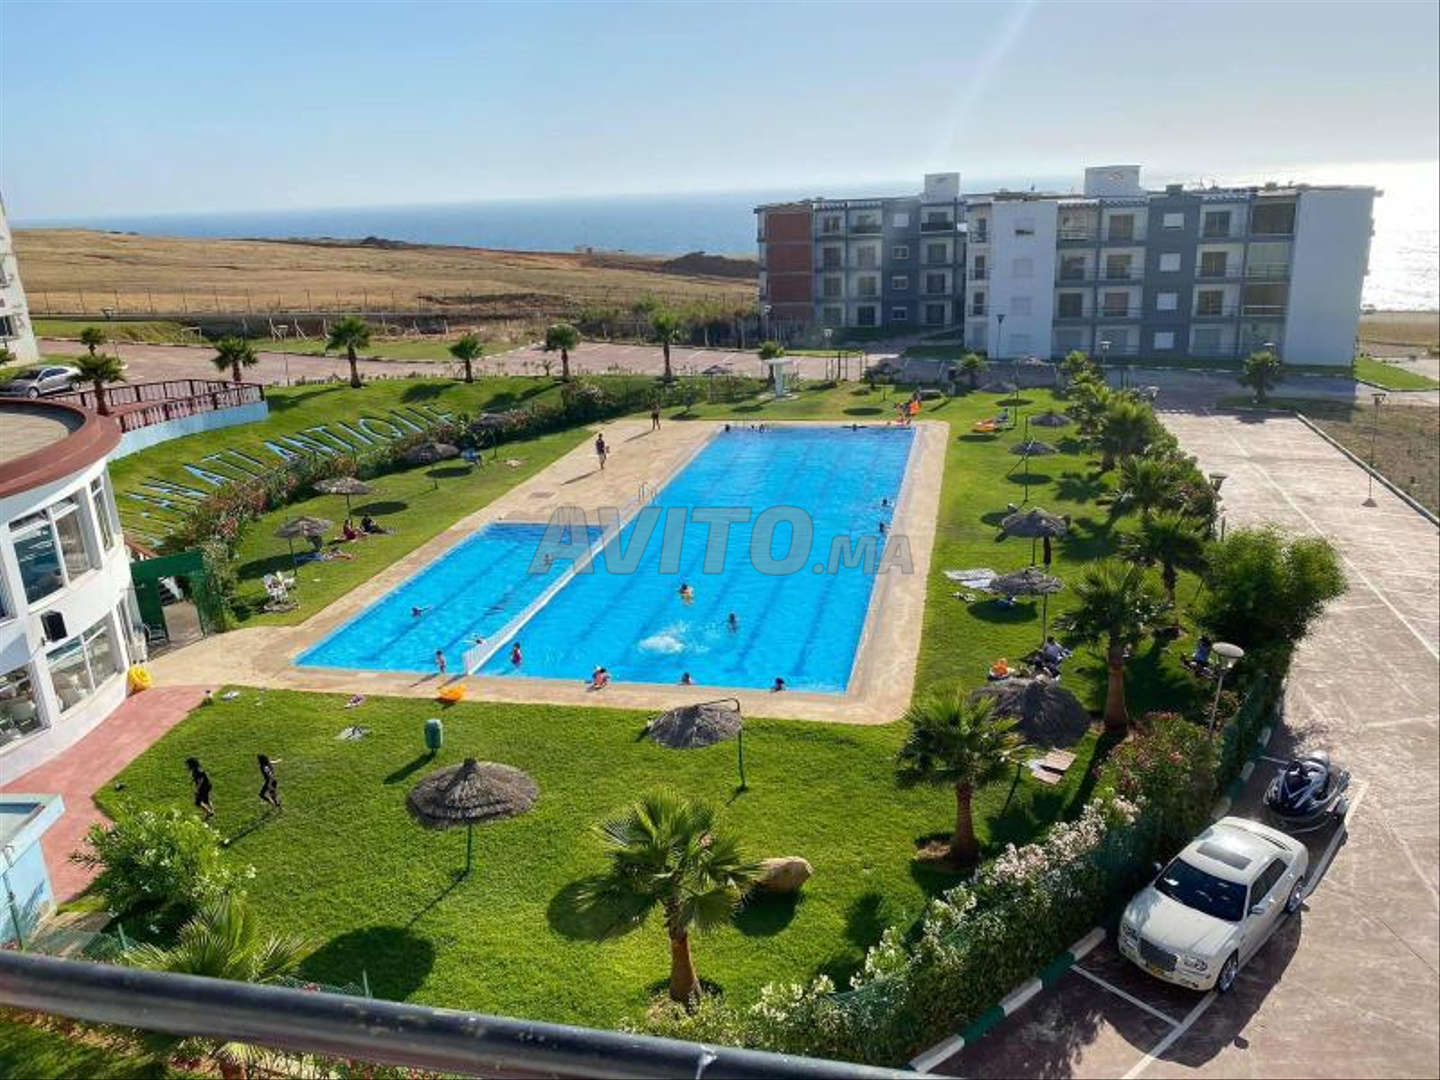 Location vacances Appart. 2 pièces - Maroc